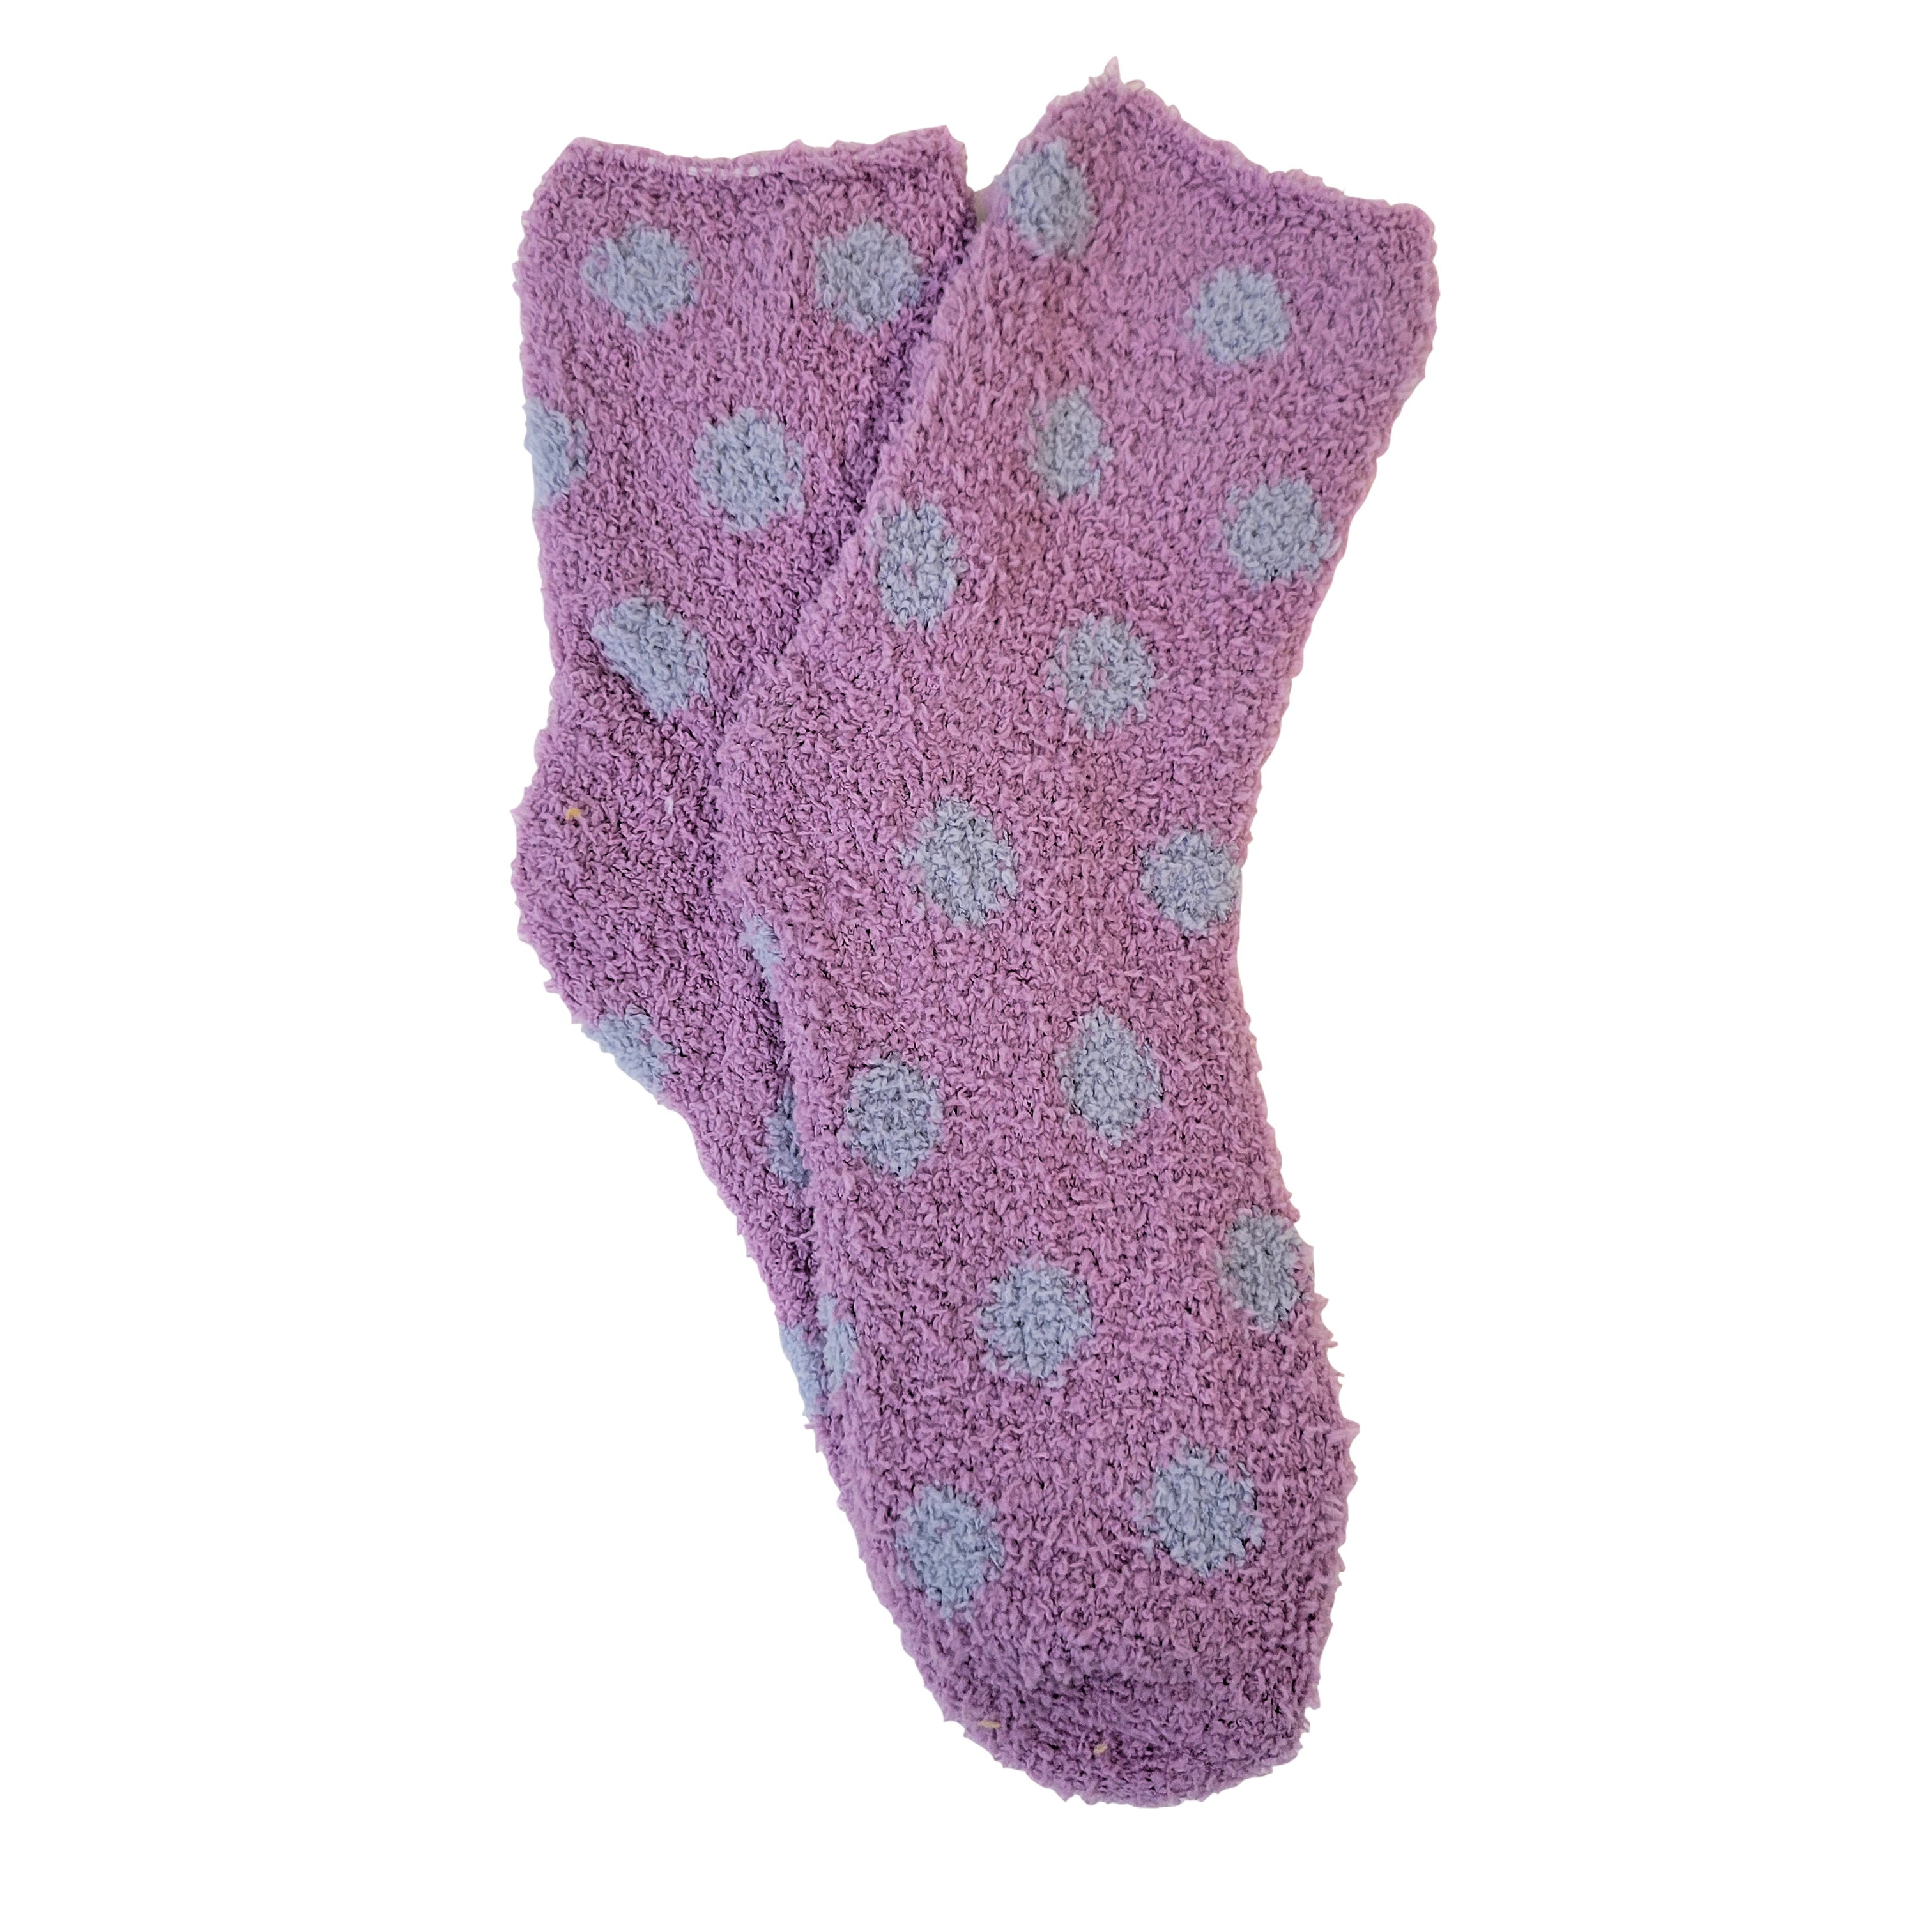 Soft Polka Dot Fuzzy Socks from the Sock Panda